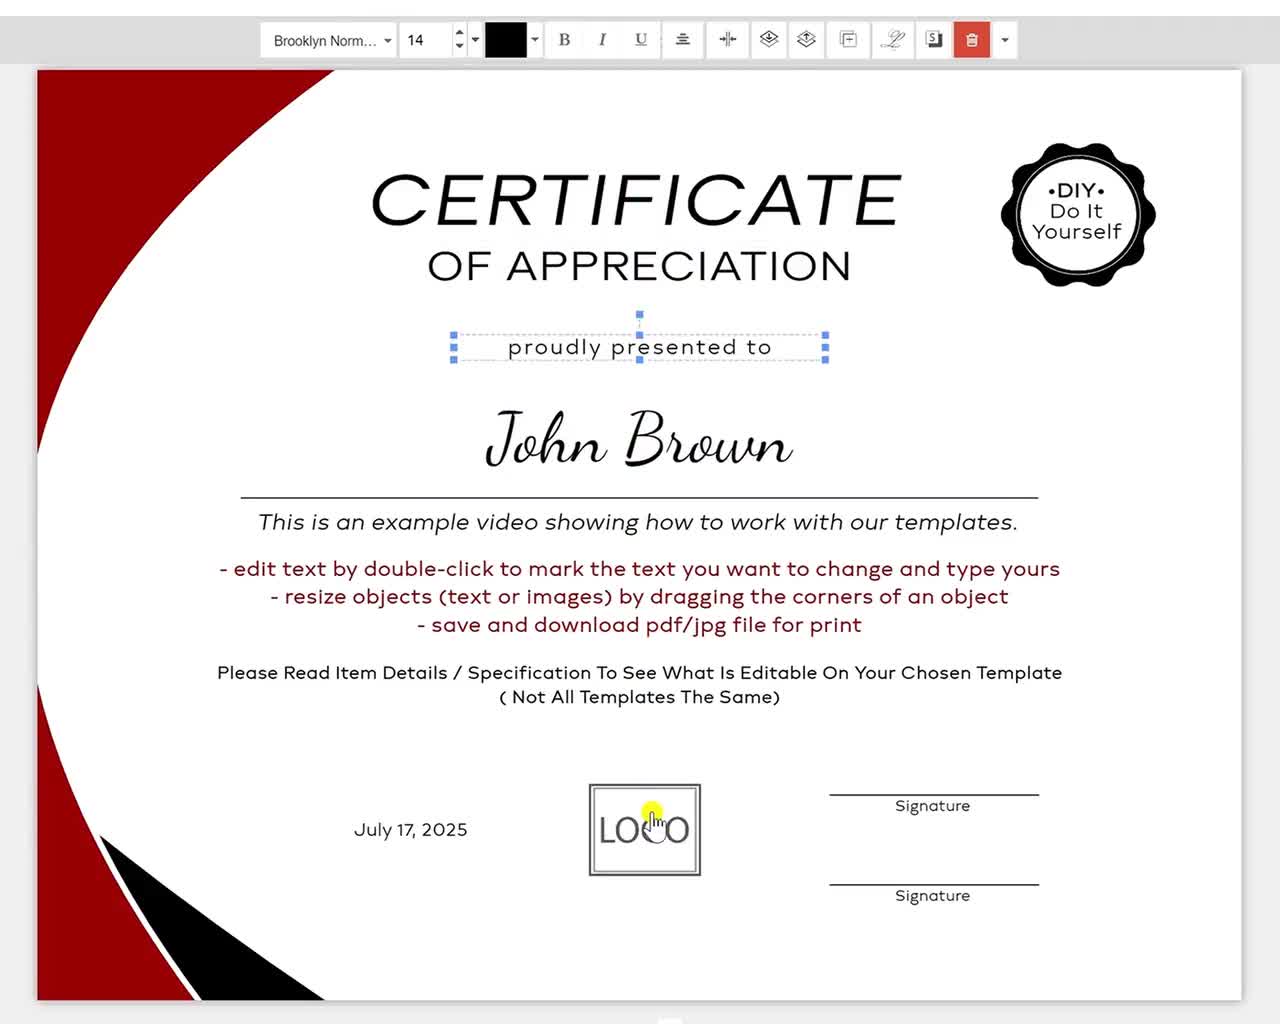 share certificate template ireland